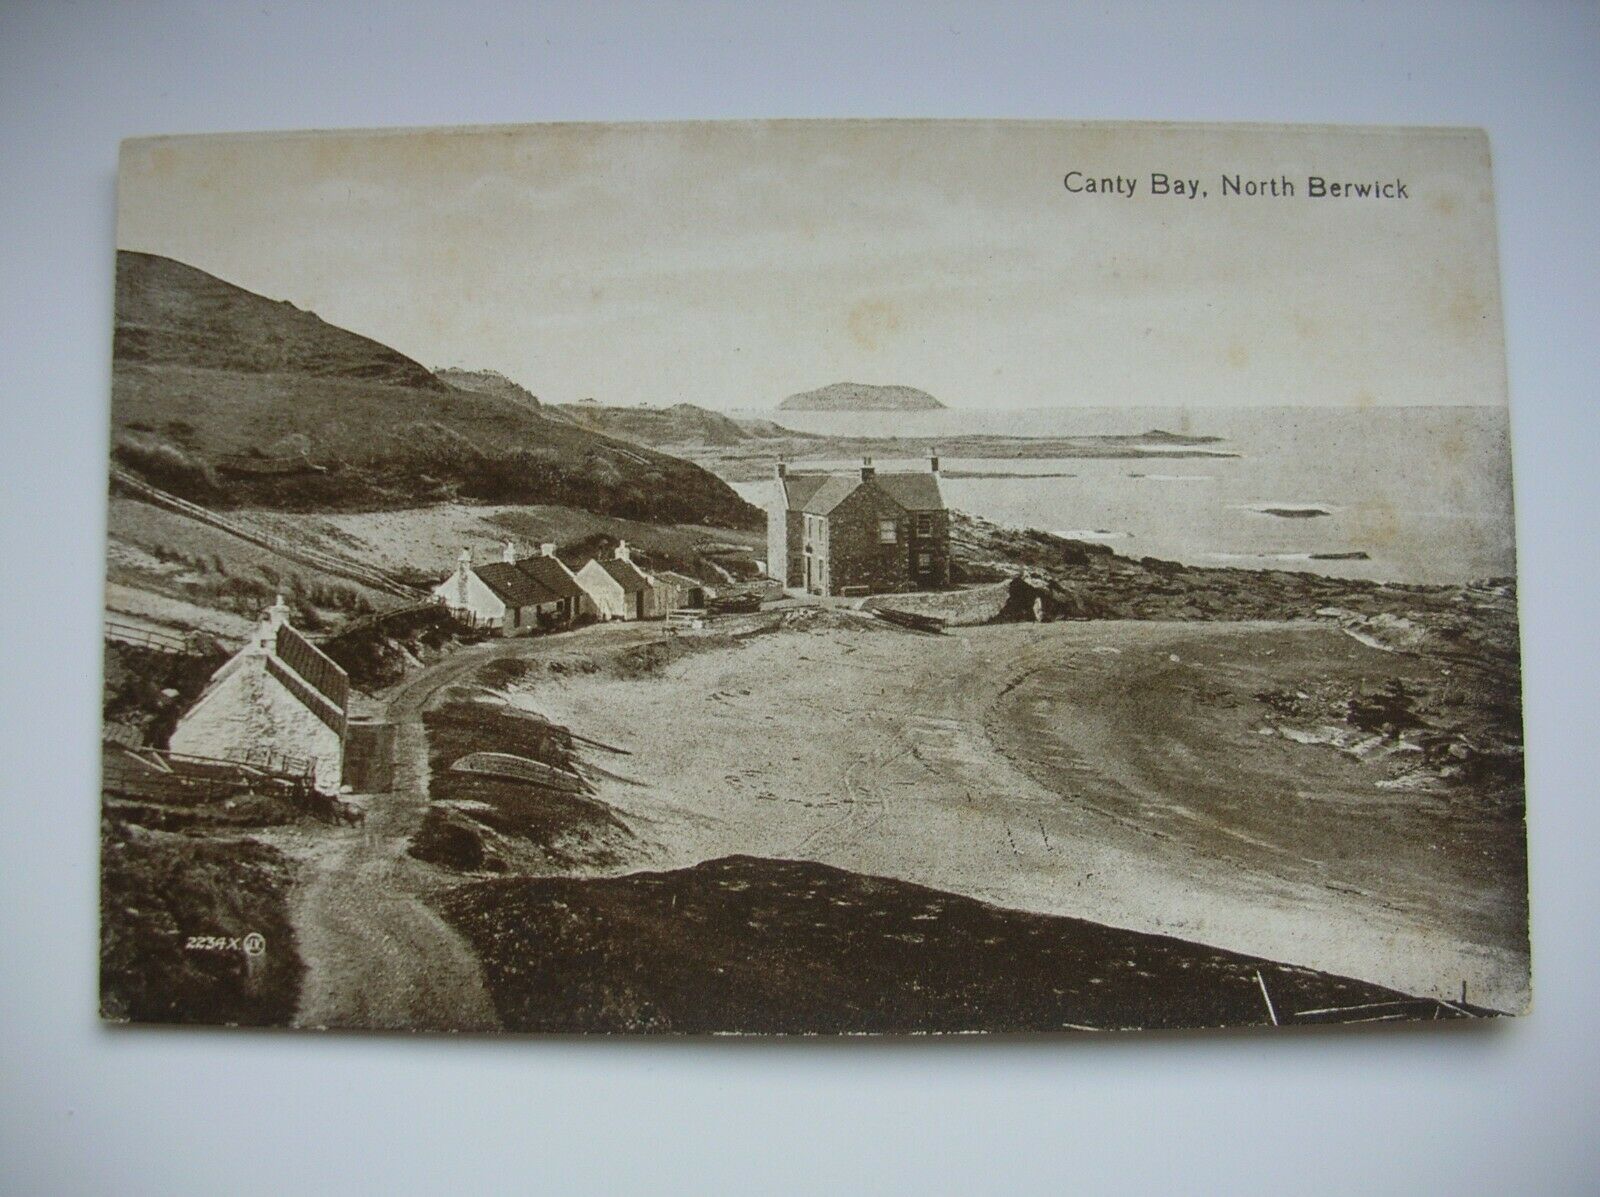 House Clearance - North Berwick – Canty Bay. Near Dunbar, Gullane, Haddington etc. (Valentine)